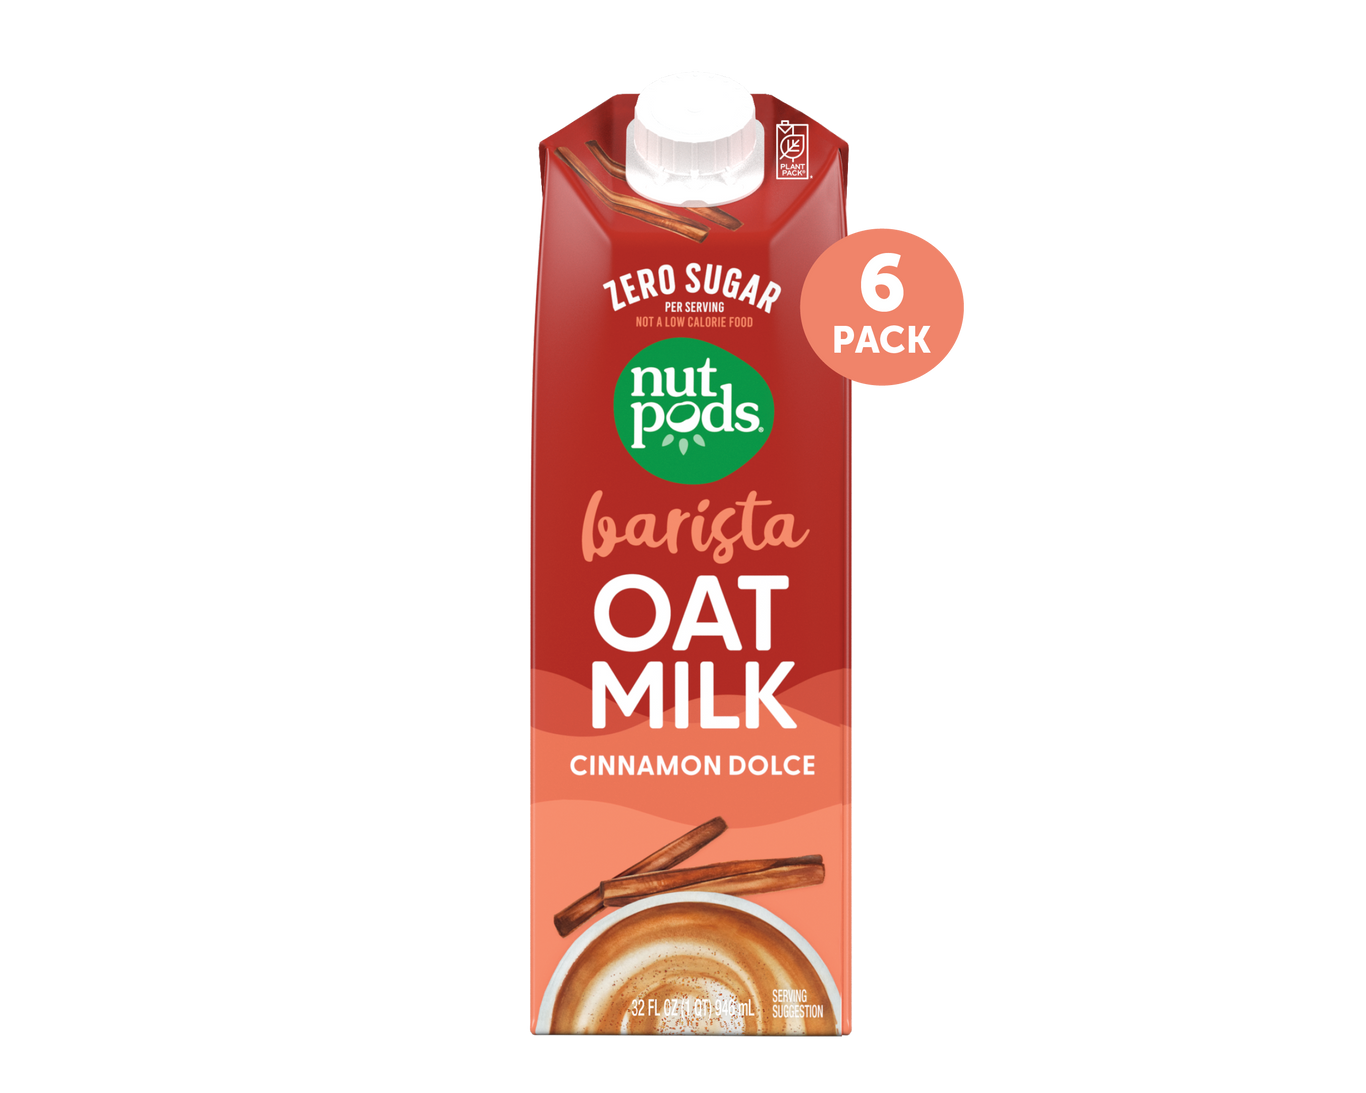 Coffee with Oat Milk - The Taste of Kosher